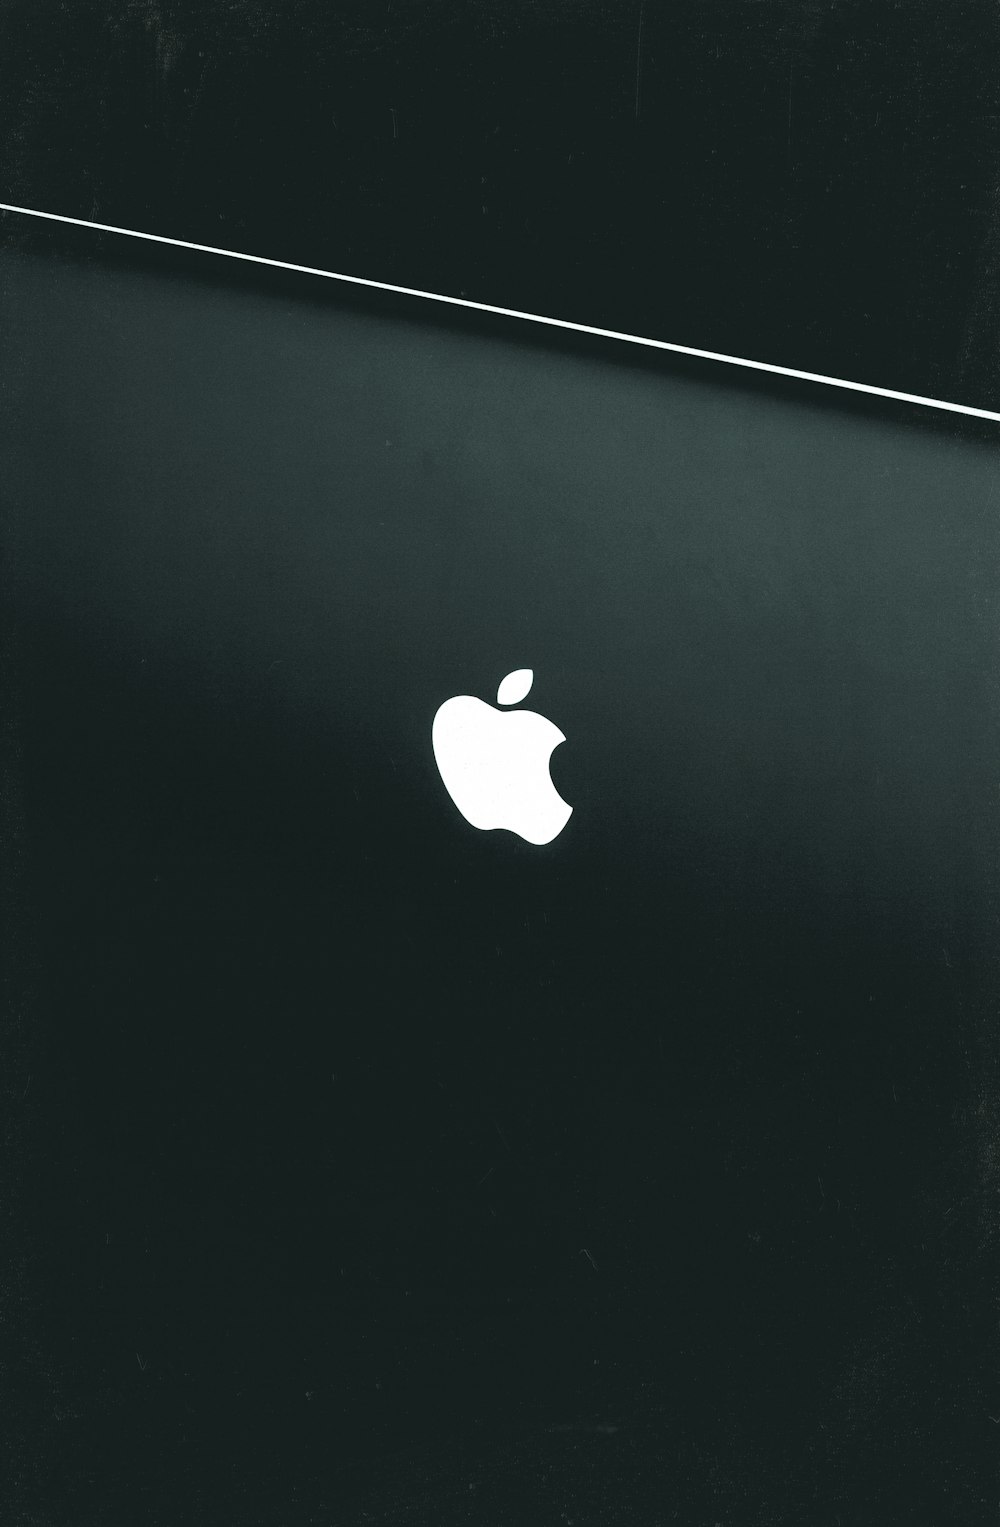 Apple Logo Wallpaper Pictures | Download Free Images on Unsplash